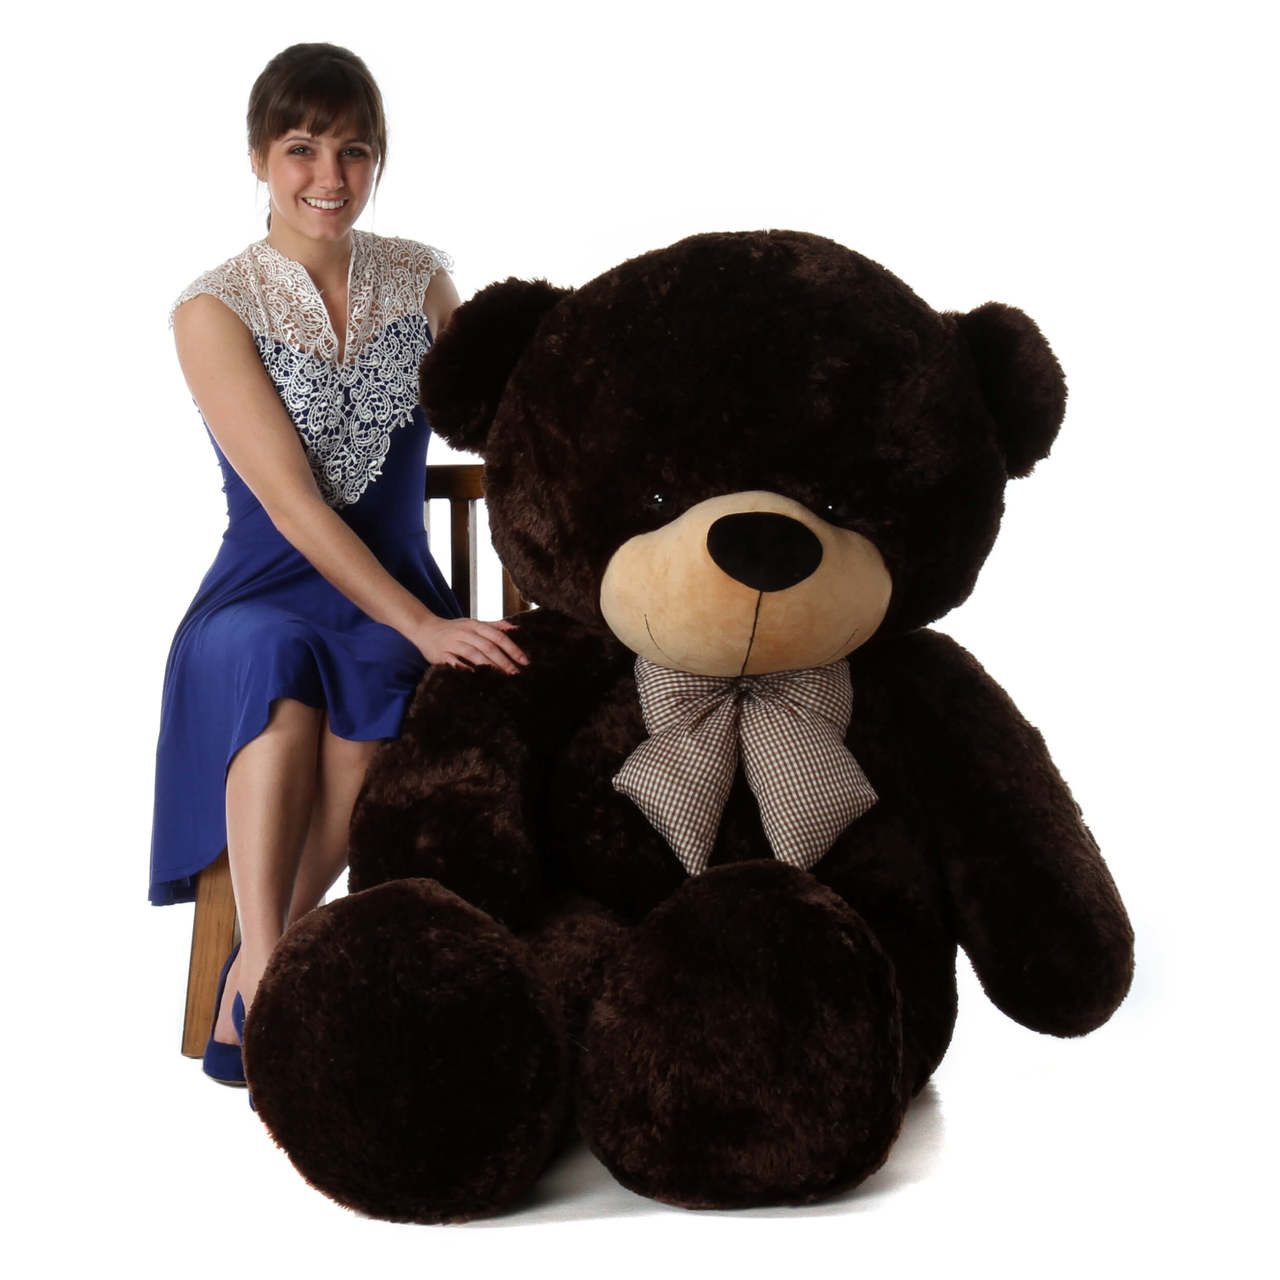 Details about   4 FT Giant Teddy Bear Stuffed Animals Plush Soft Cuddly Stuffed Bear, 